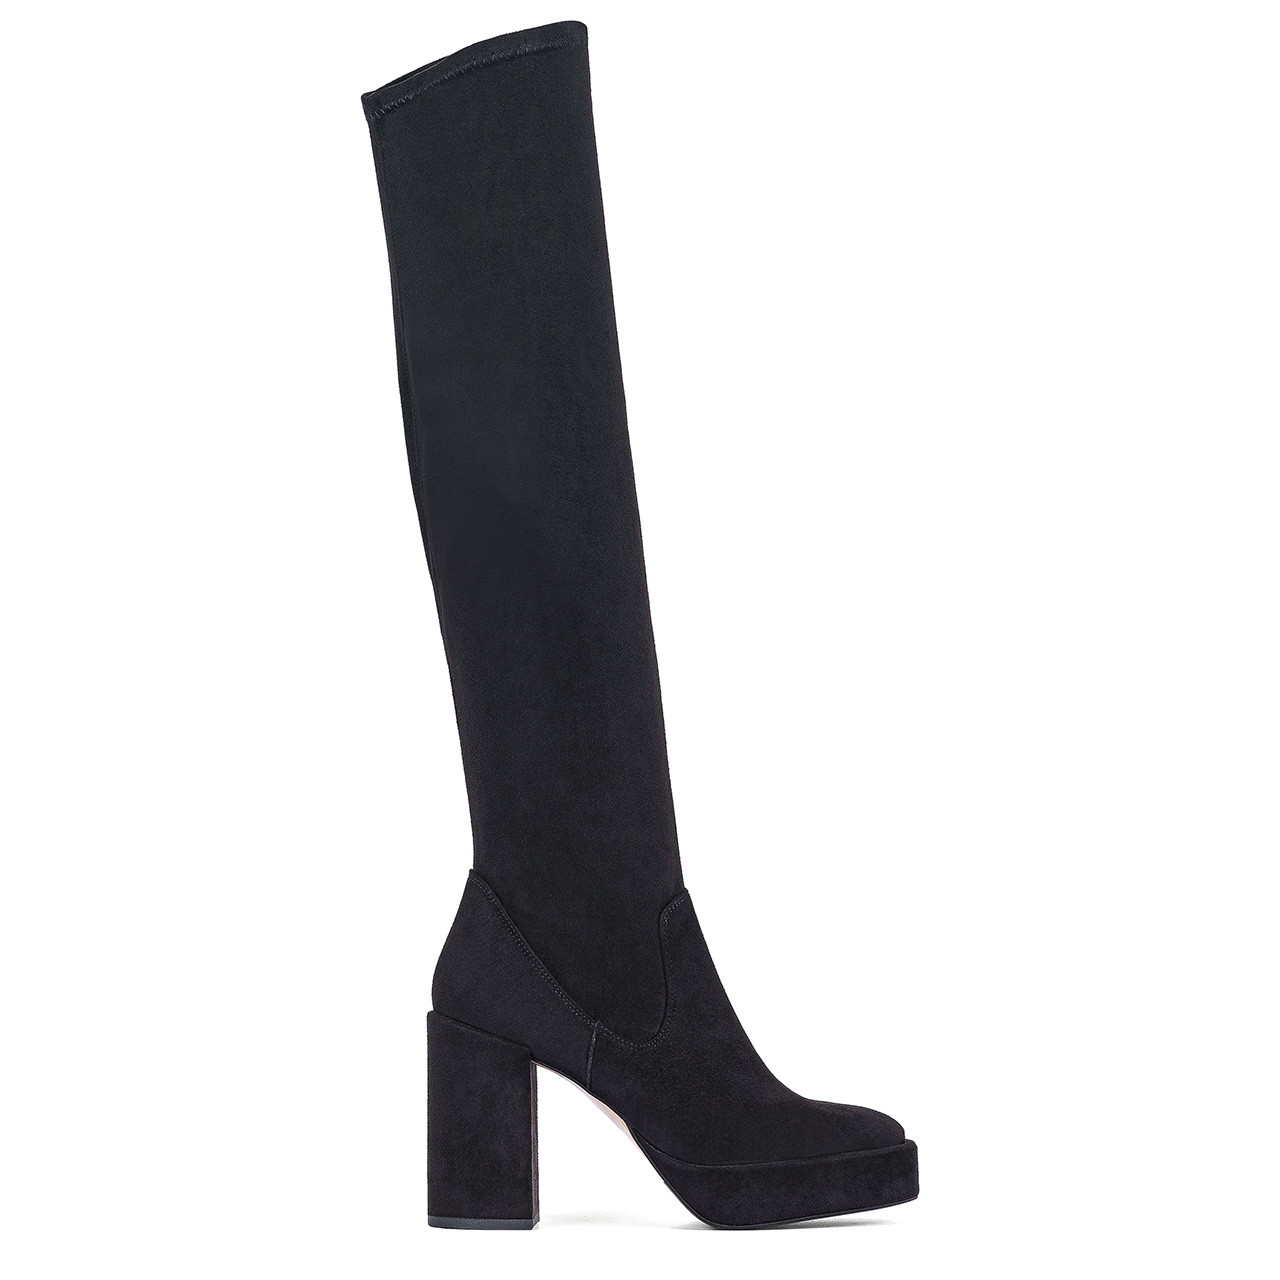 Black leather women's platform thigh high boots